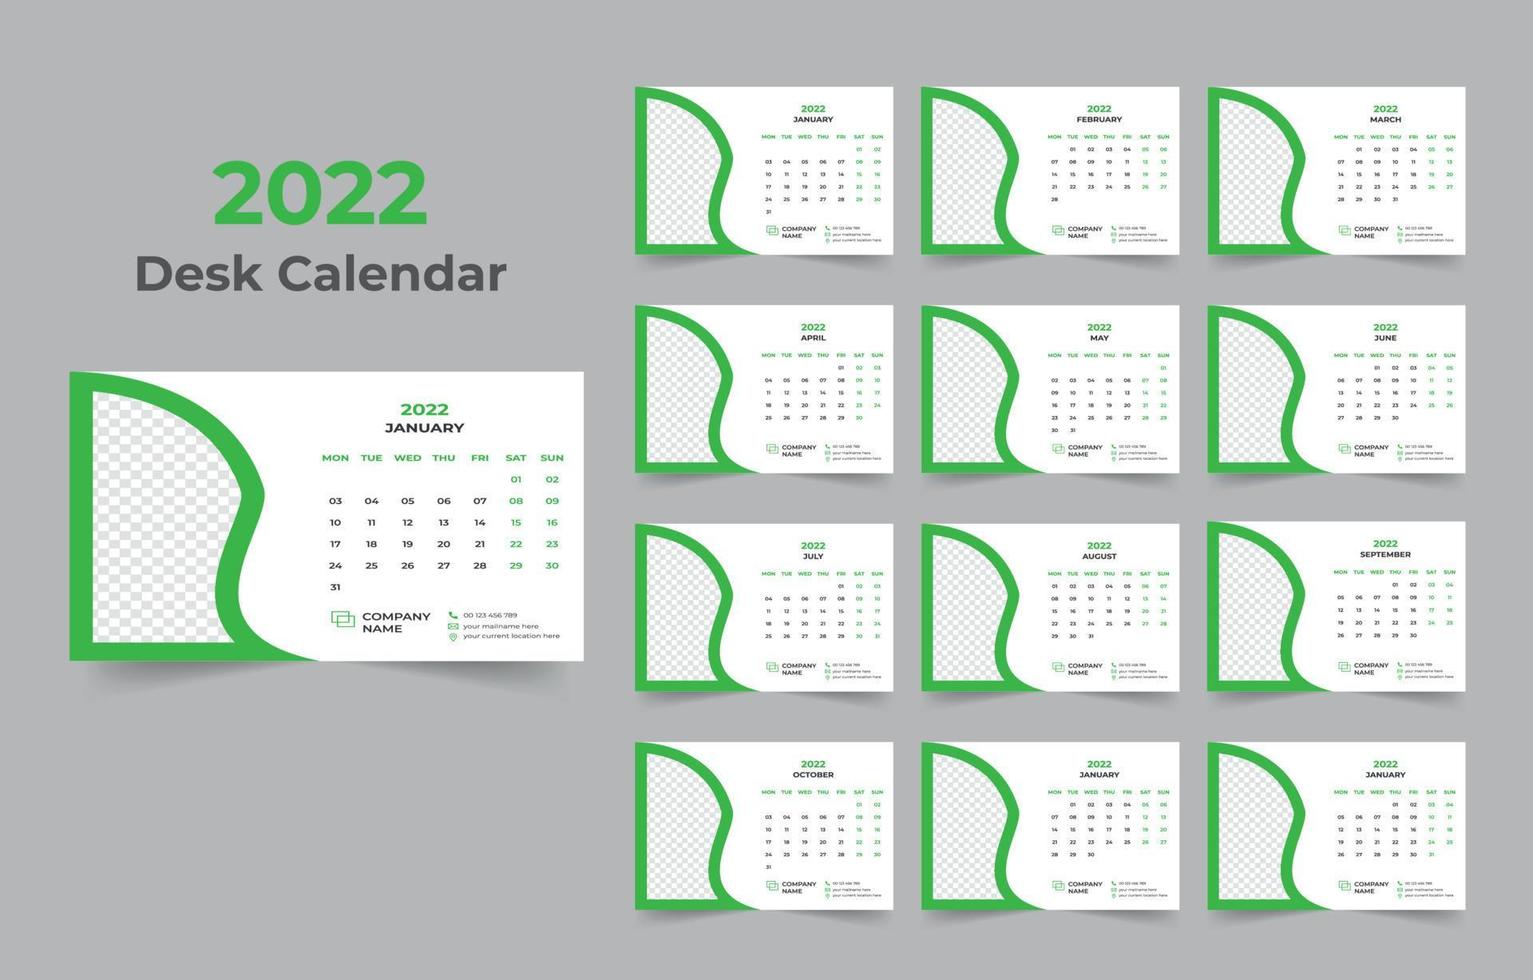 Diseño de plantilla de calendario de escritorio 2022 vector